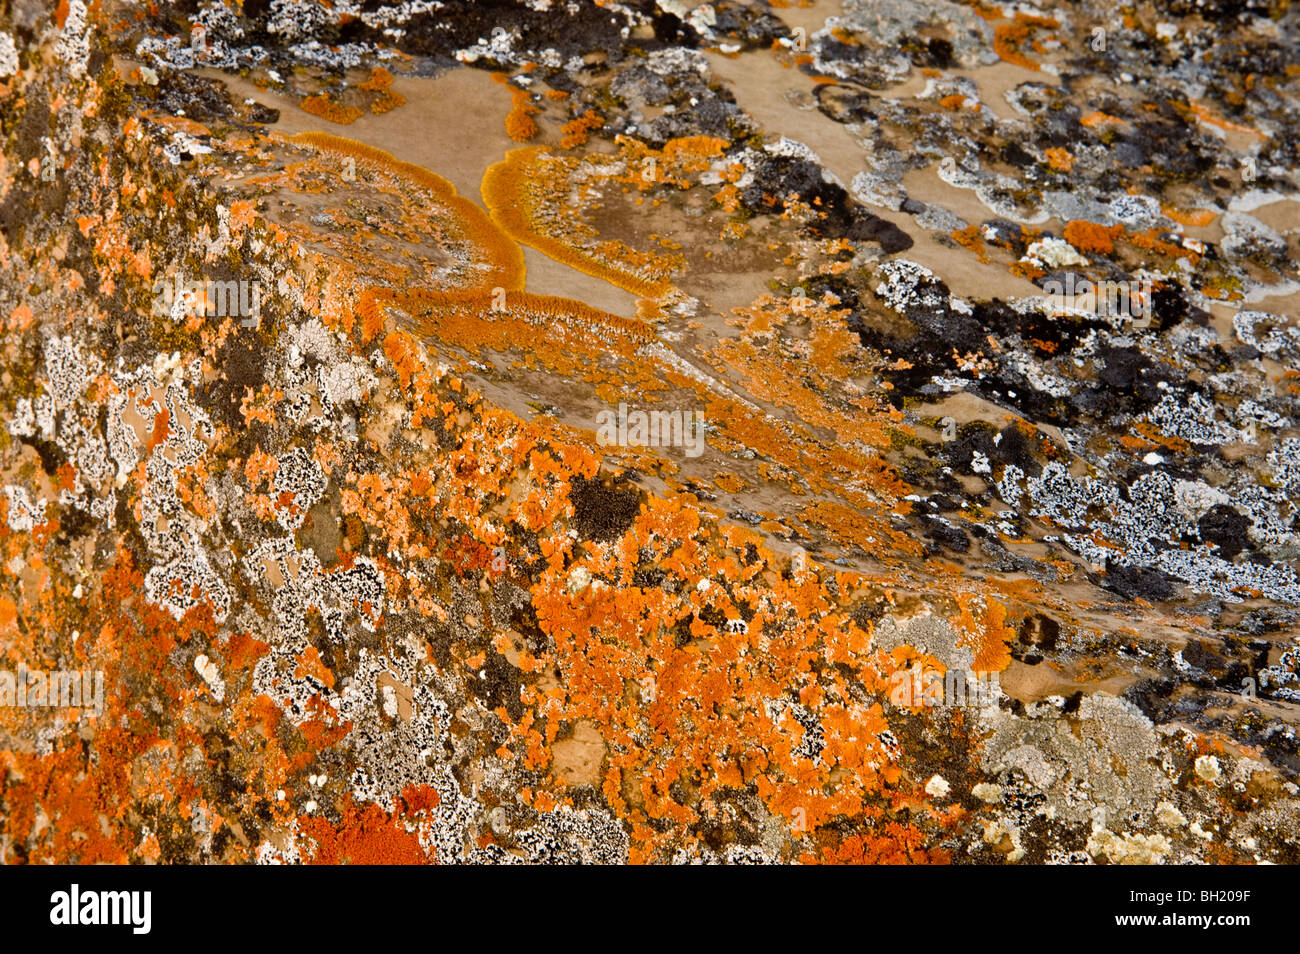 Liquen naranja colonia de concreción de arenisca boulder cara, cerca de siete personas, Alberta, Canadá Foto de stock